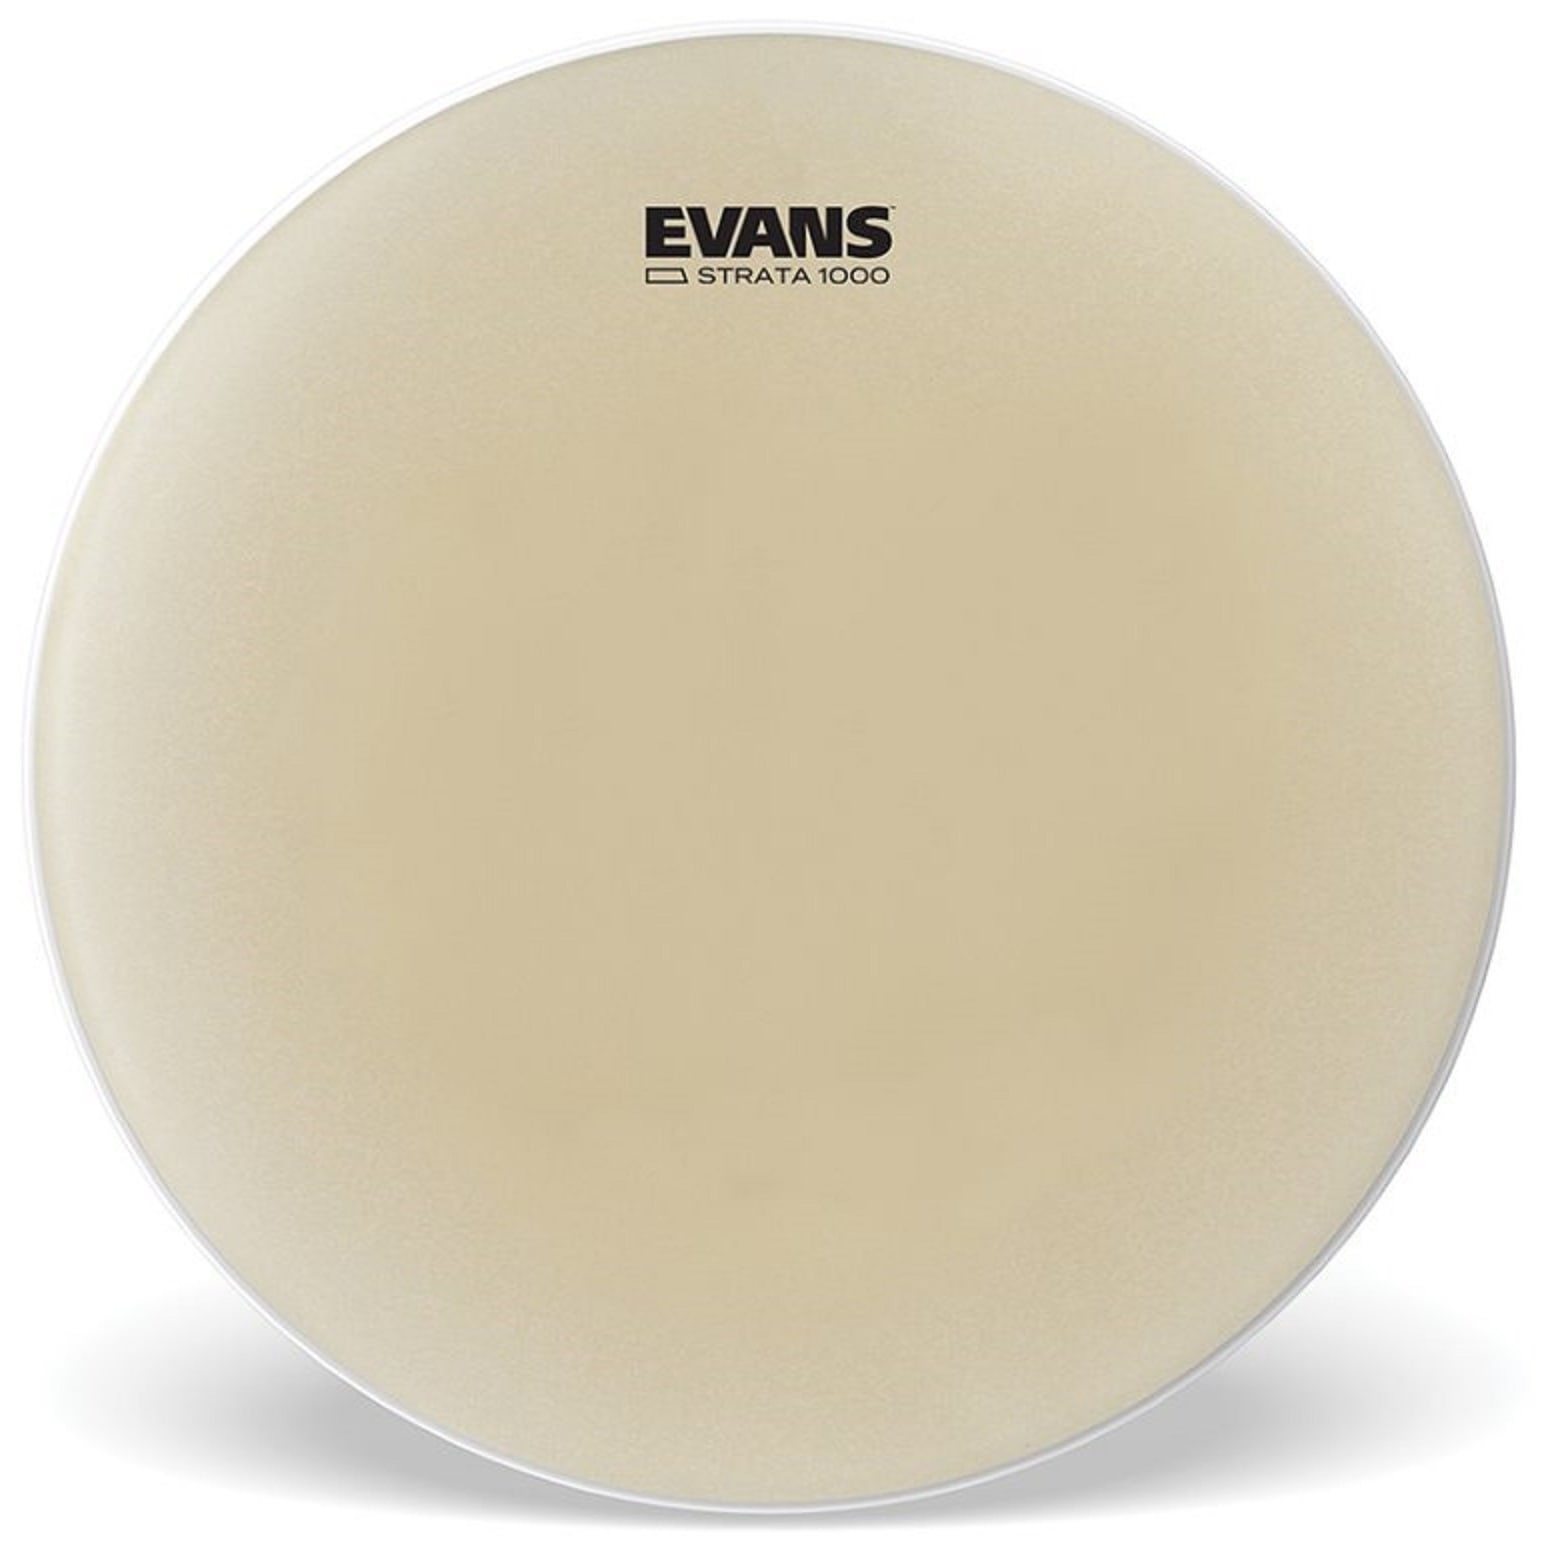 Evans CT13S - Strata 1000 Concert Drum Head, 13 Zoll